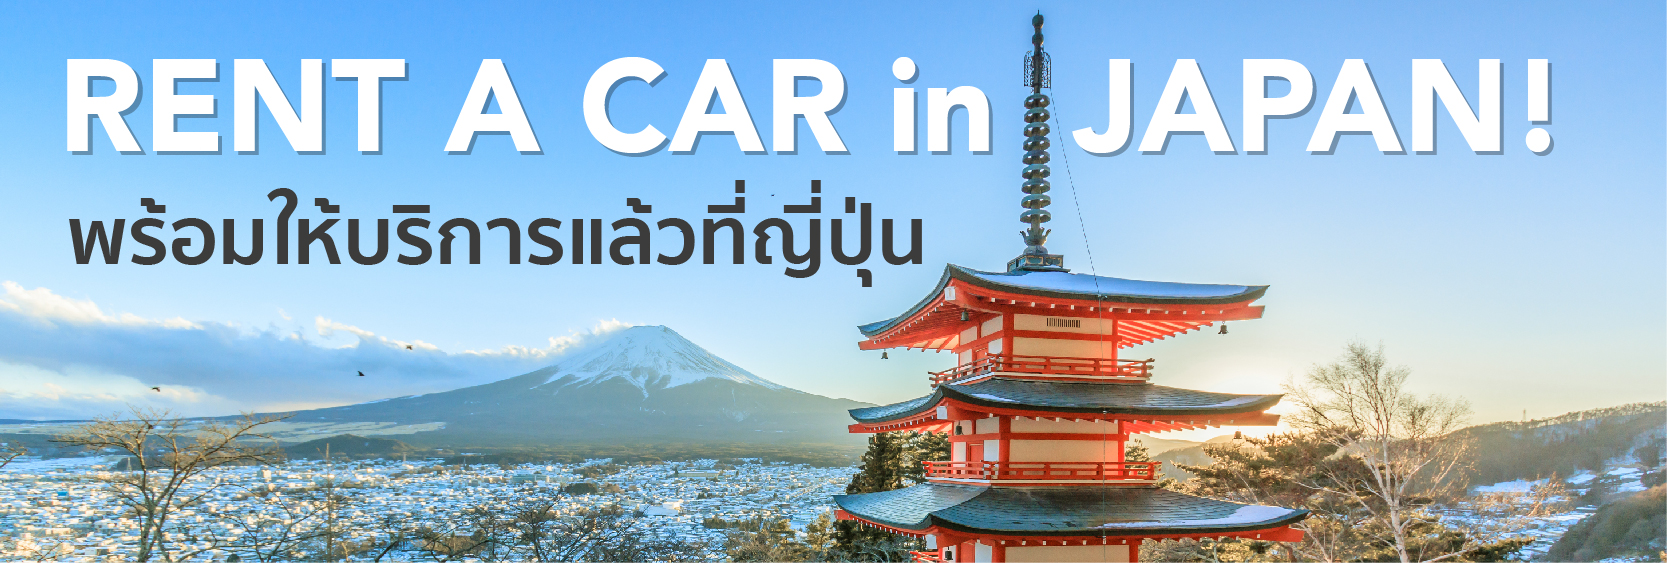 japan car rental banner